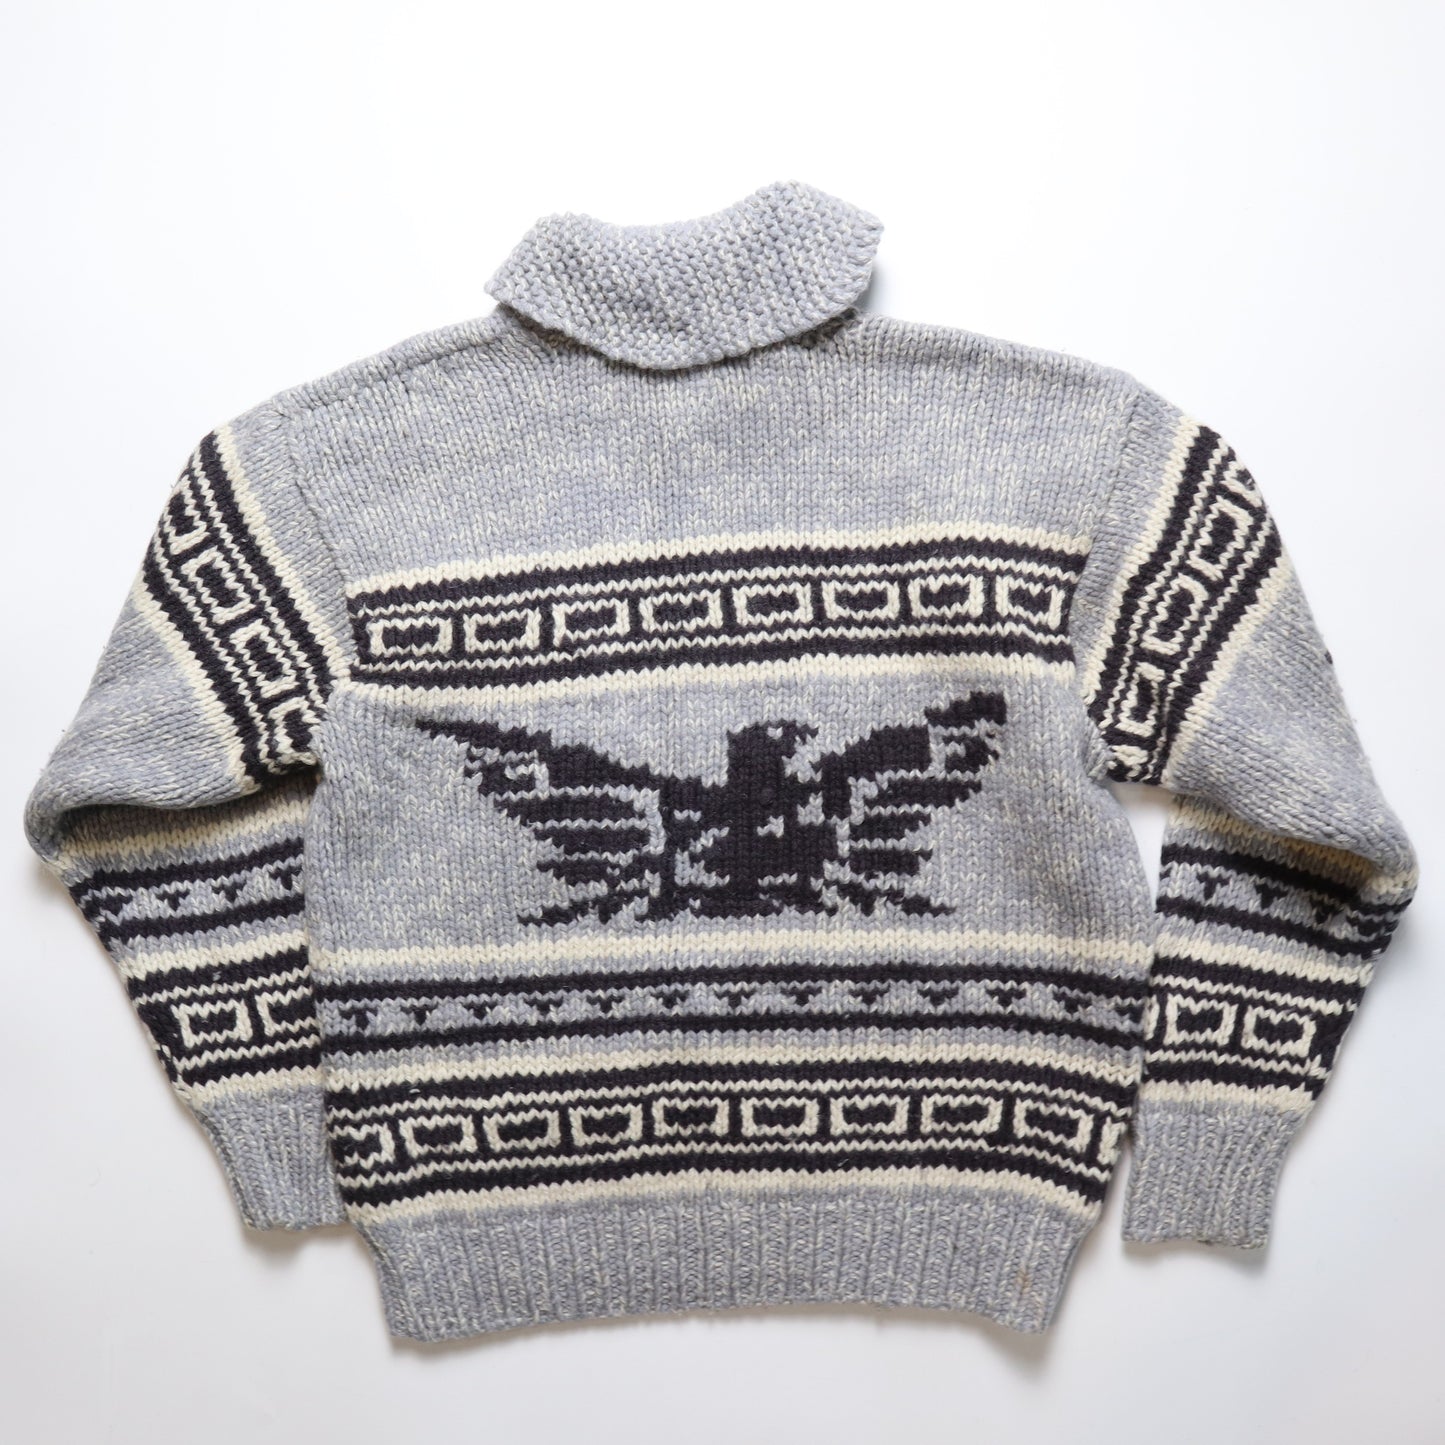 Thunderbird Folk Totem Kaozin Sweater